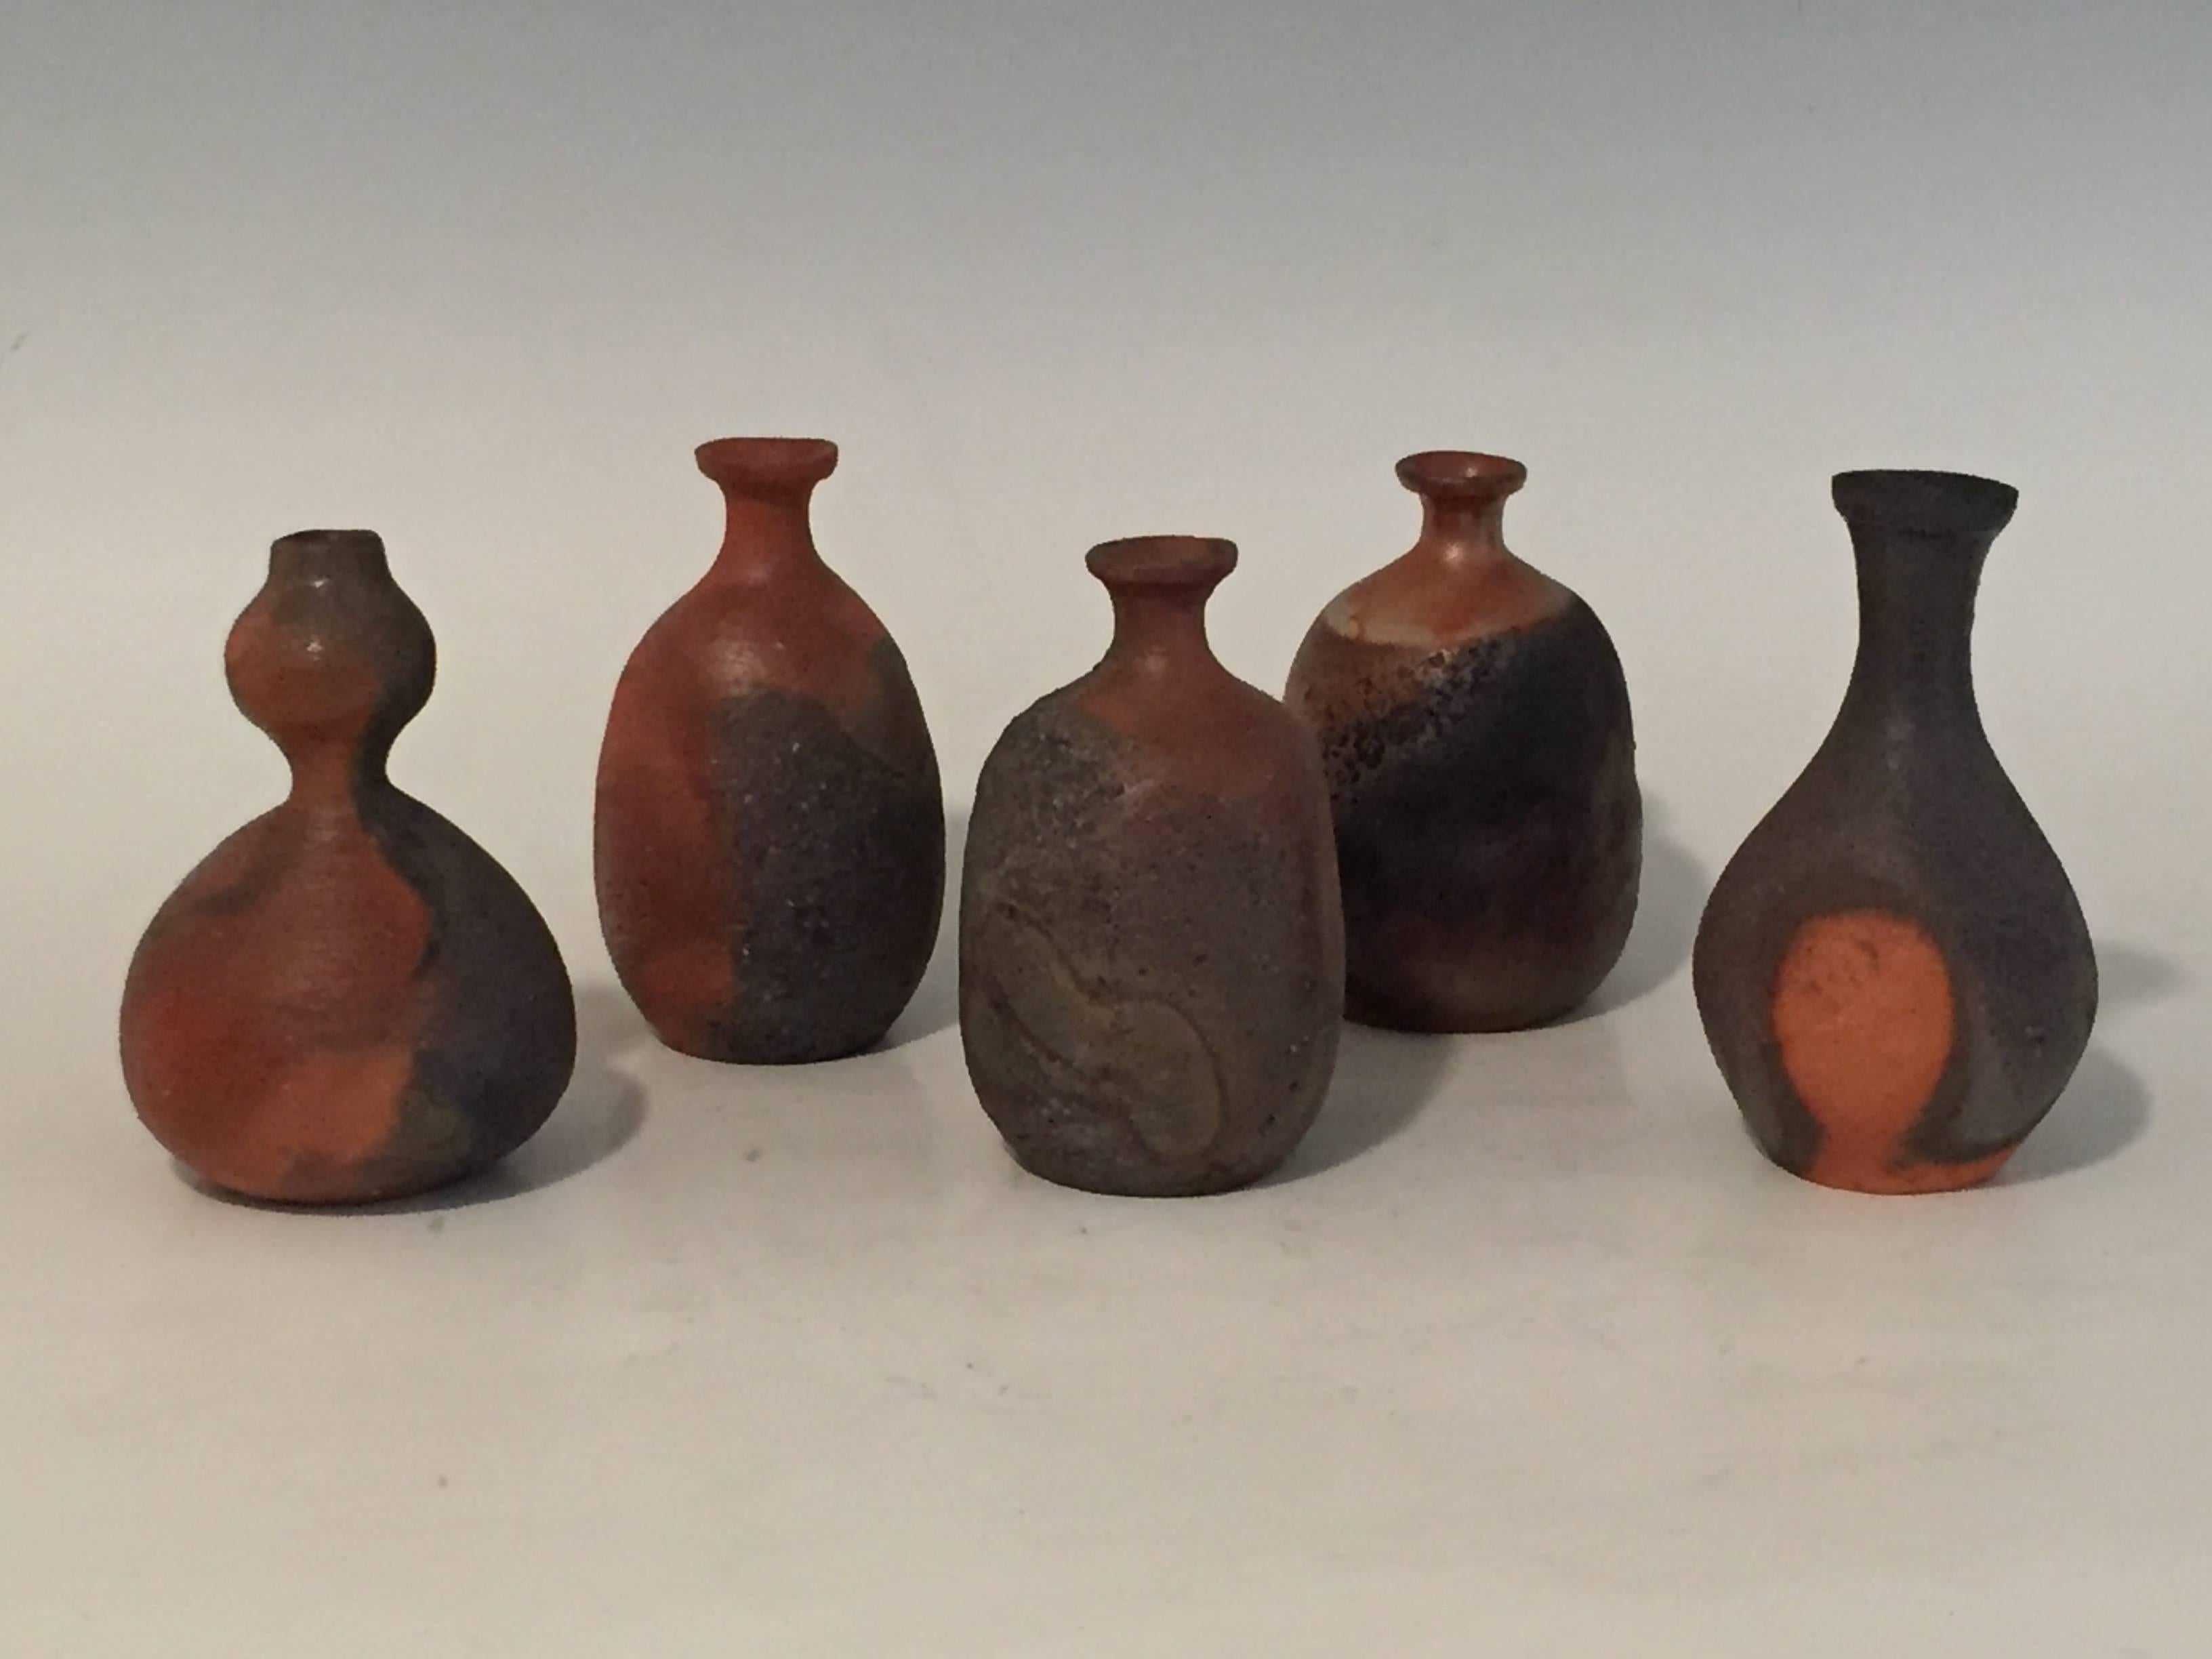 Offered by J R Richards
Set of five ceramic sake bottles by three well known Contemporary Japanese Artists:
Wakimoto Hiroyuki. Born 1952-
Osawa Tsuneo. Born 1962-
Hoshino Sei. Born 1959
Each approximately 5.5